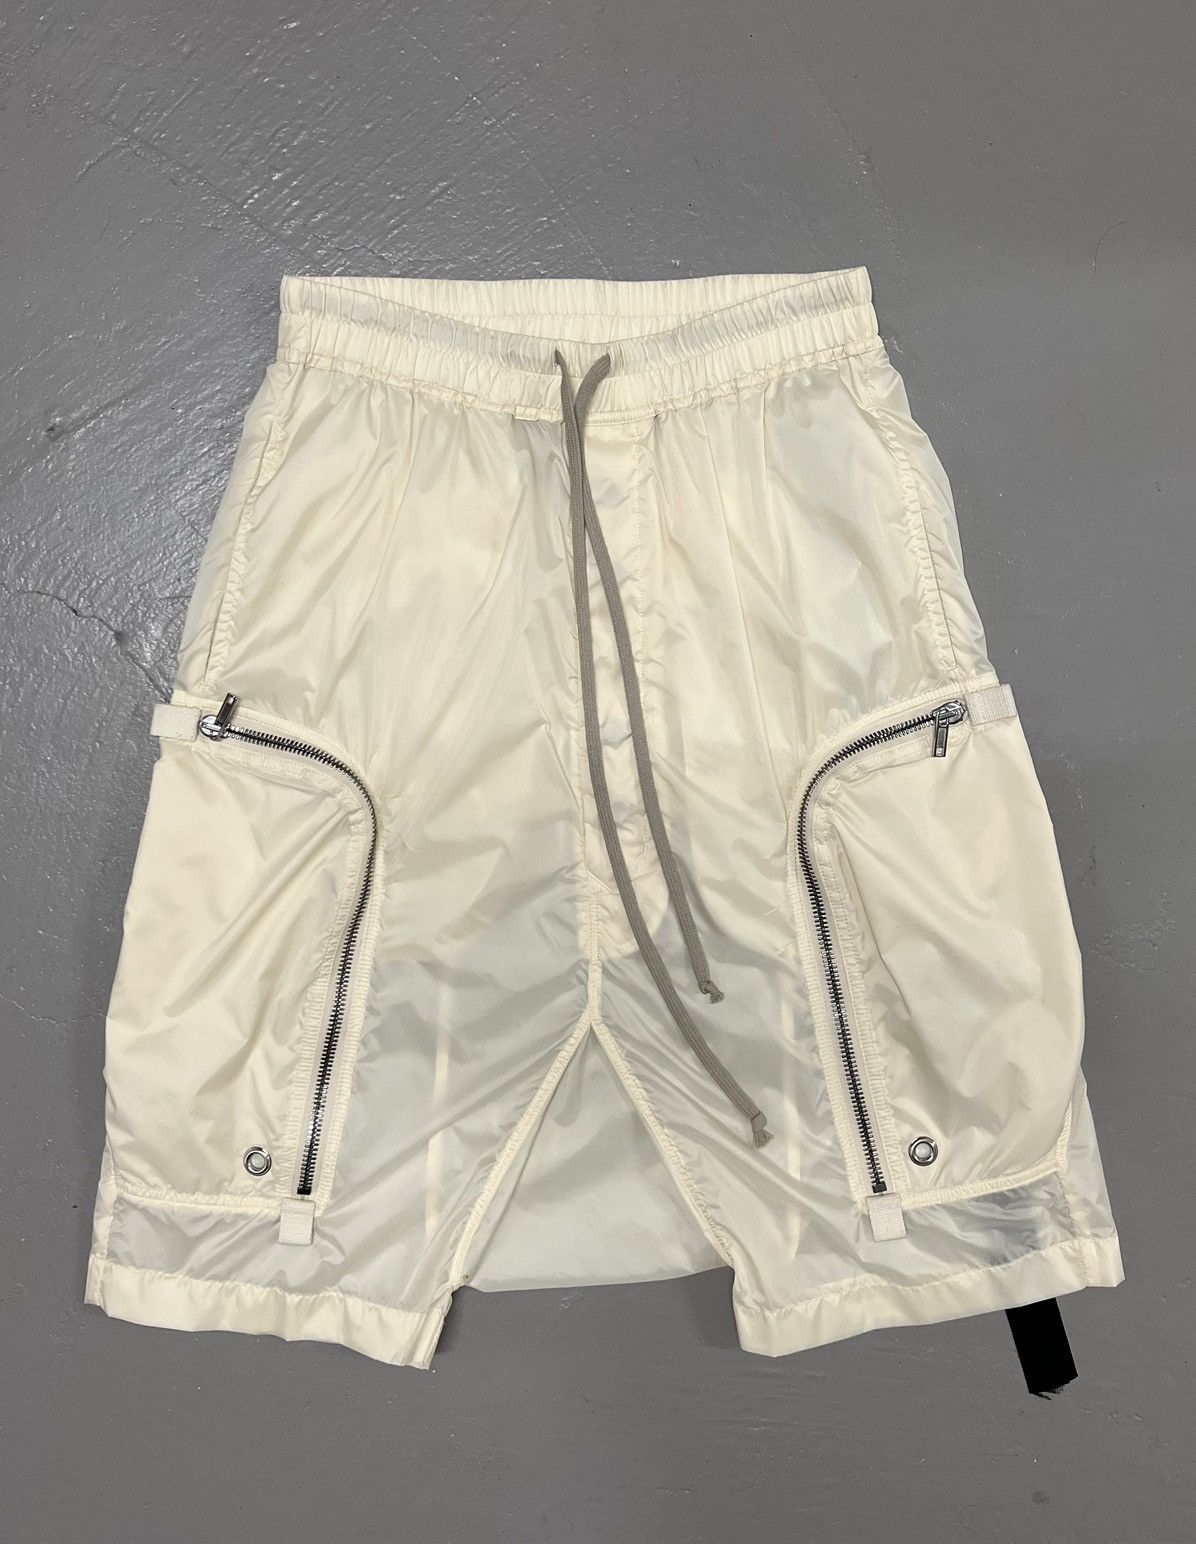 Rick Owens Bauhaus Pod shorts | Grailed